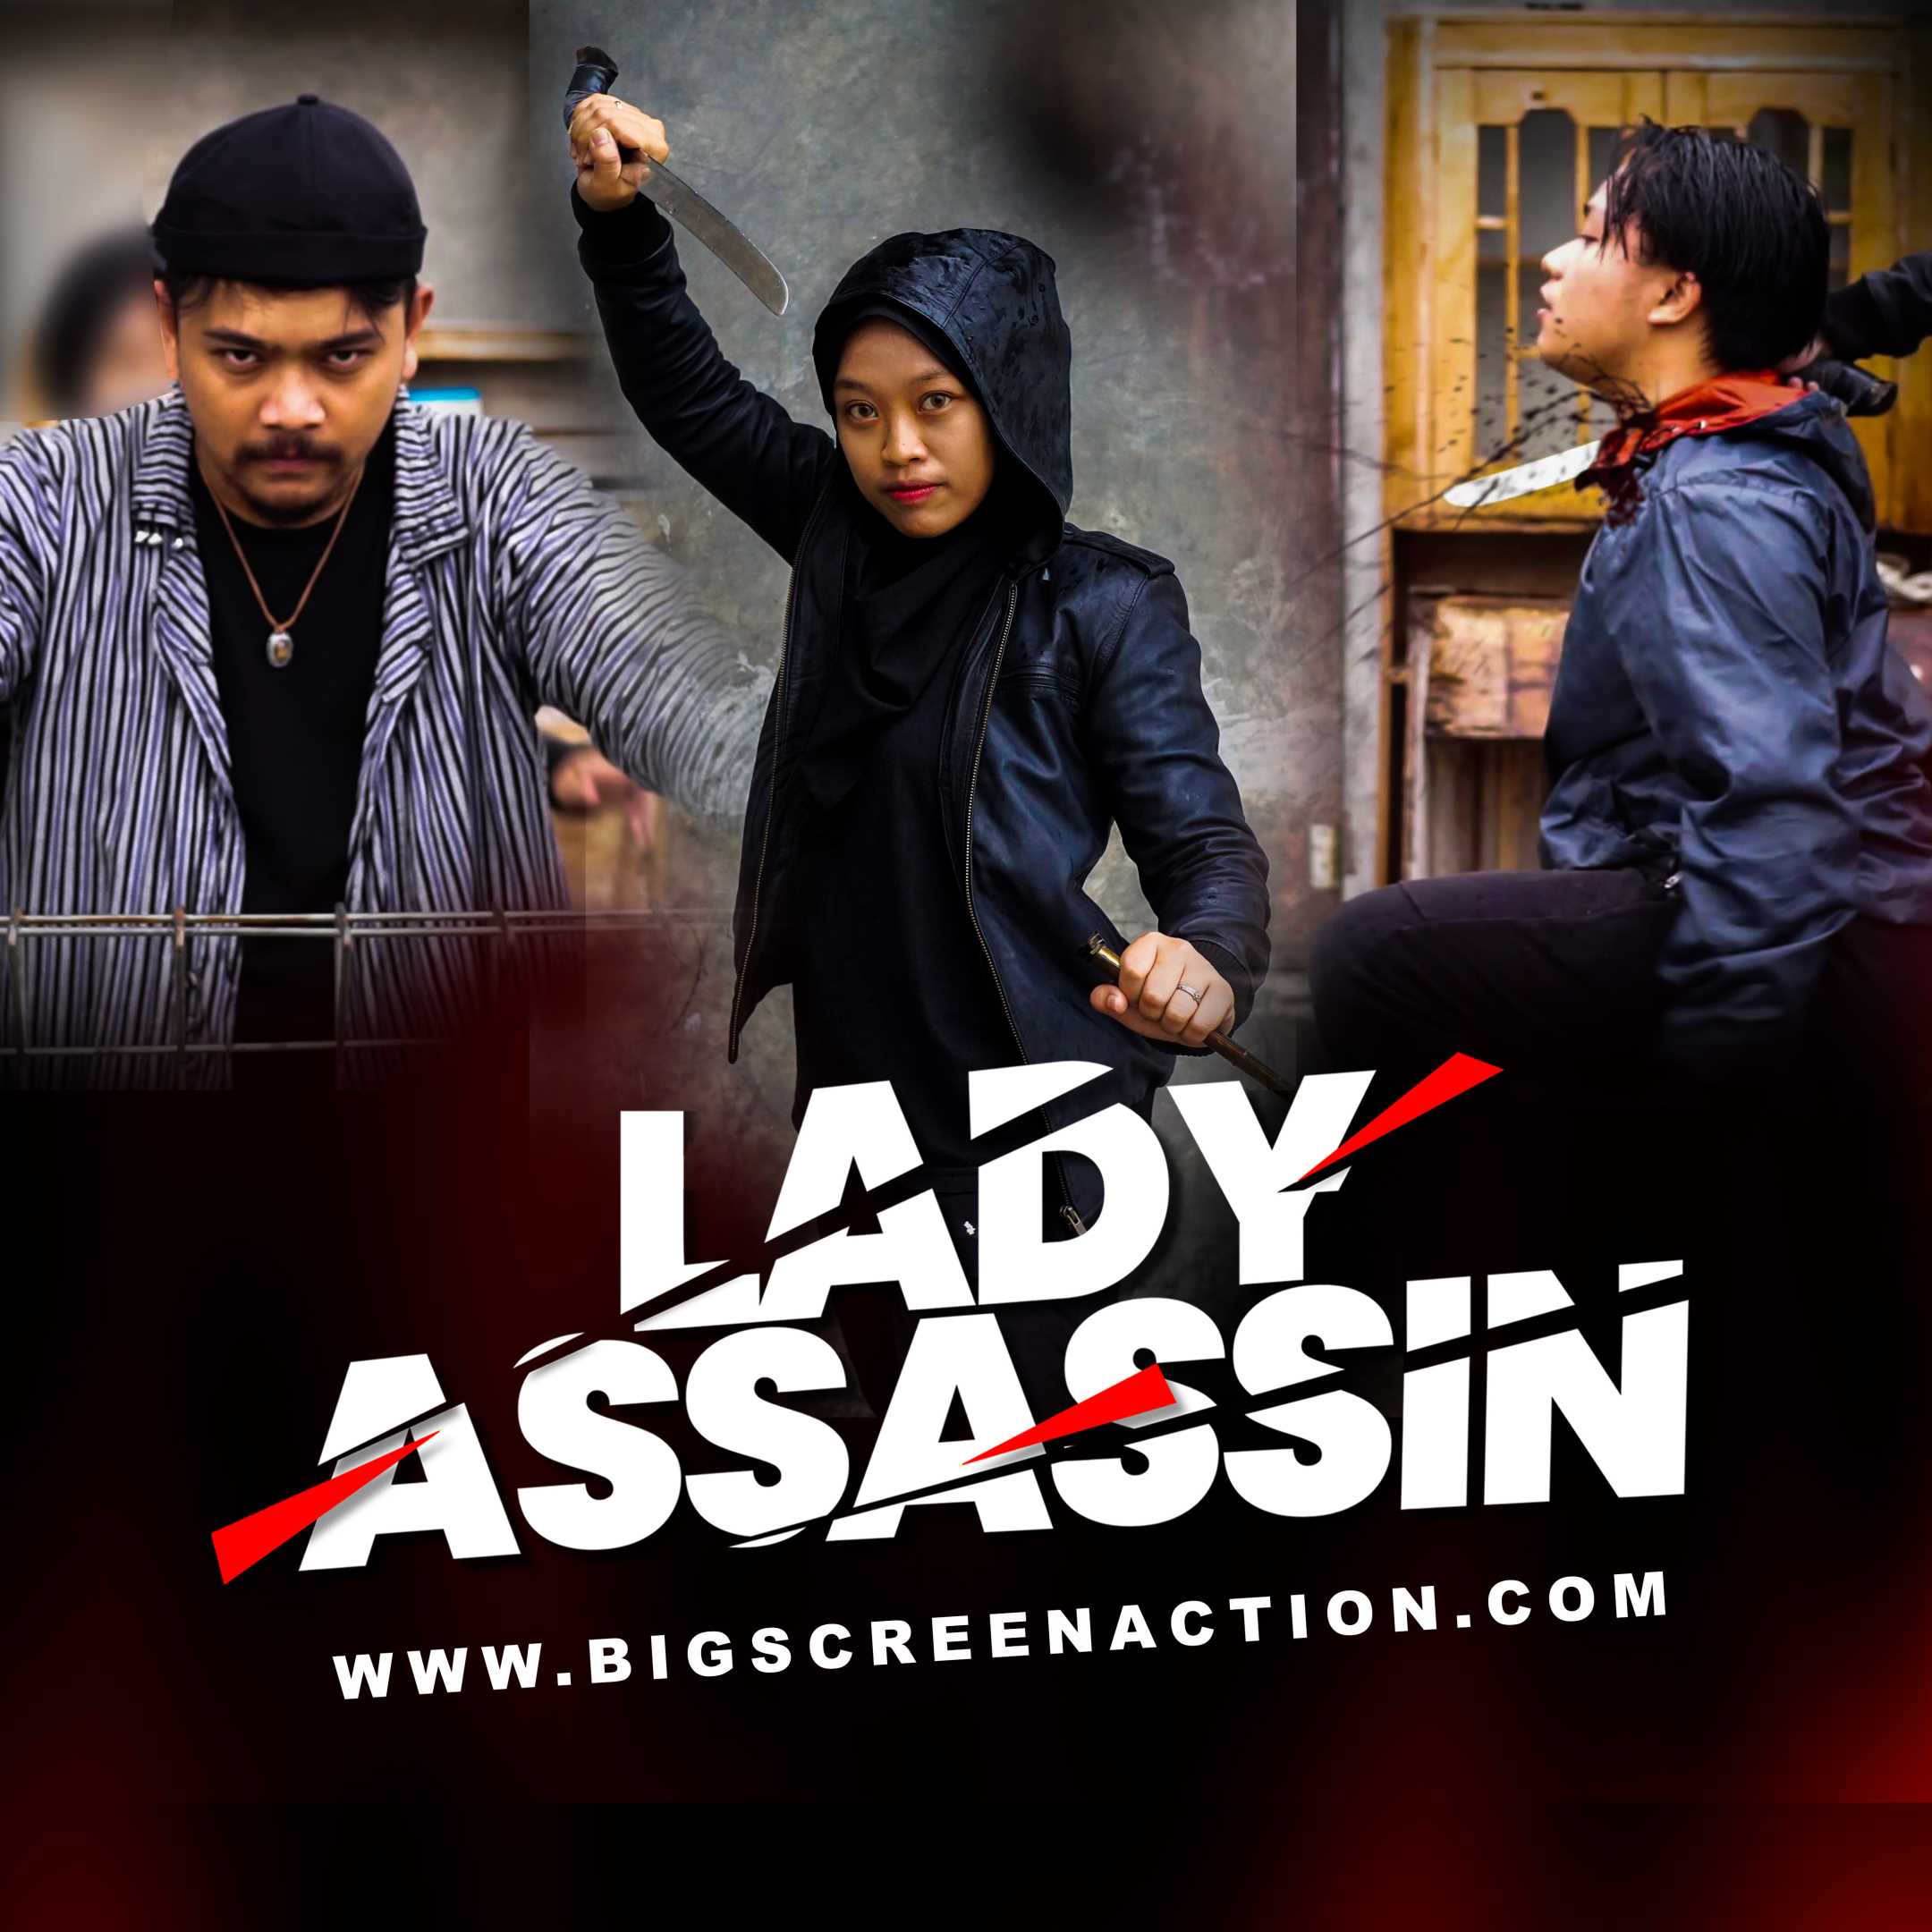 <b>TOP TITLE:</b><br/>Lady Assassin